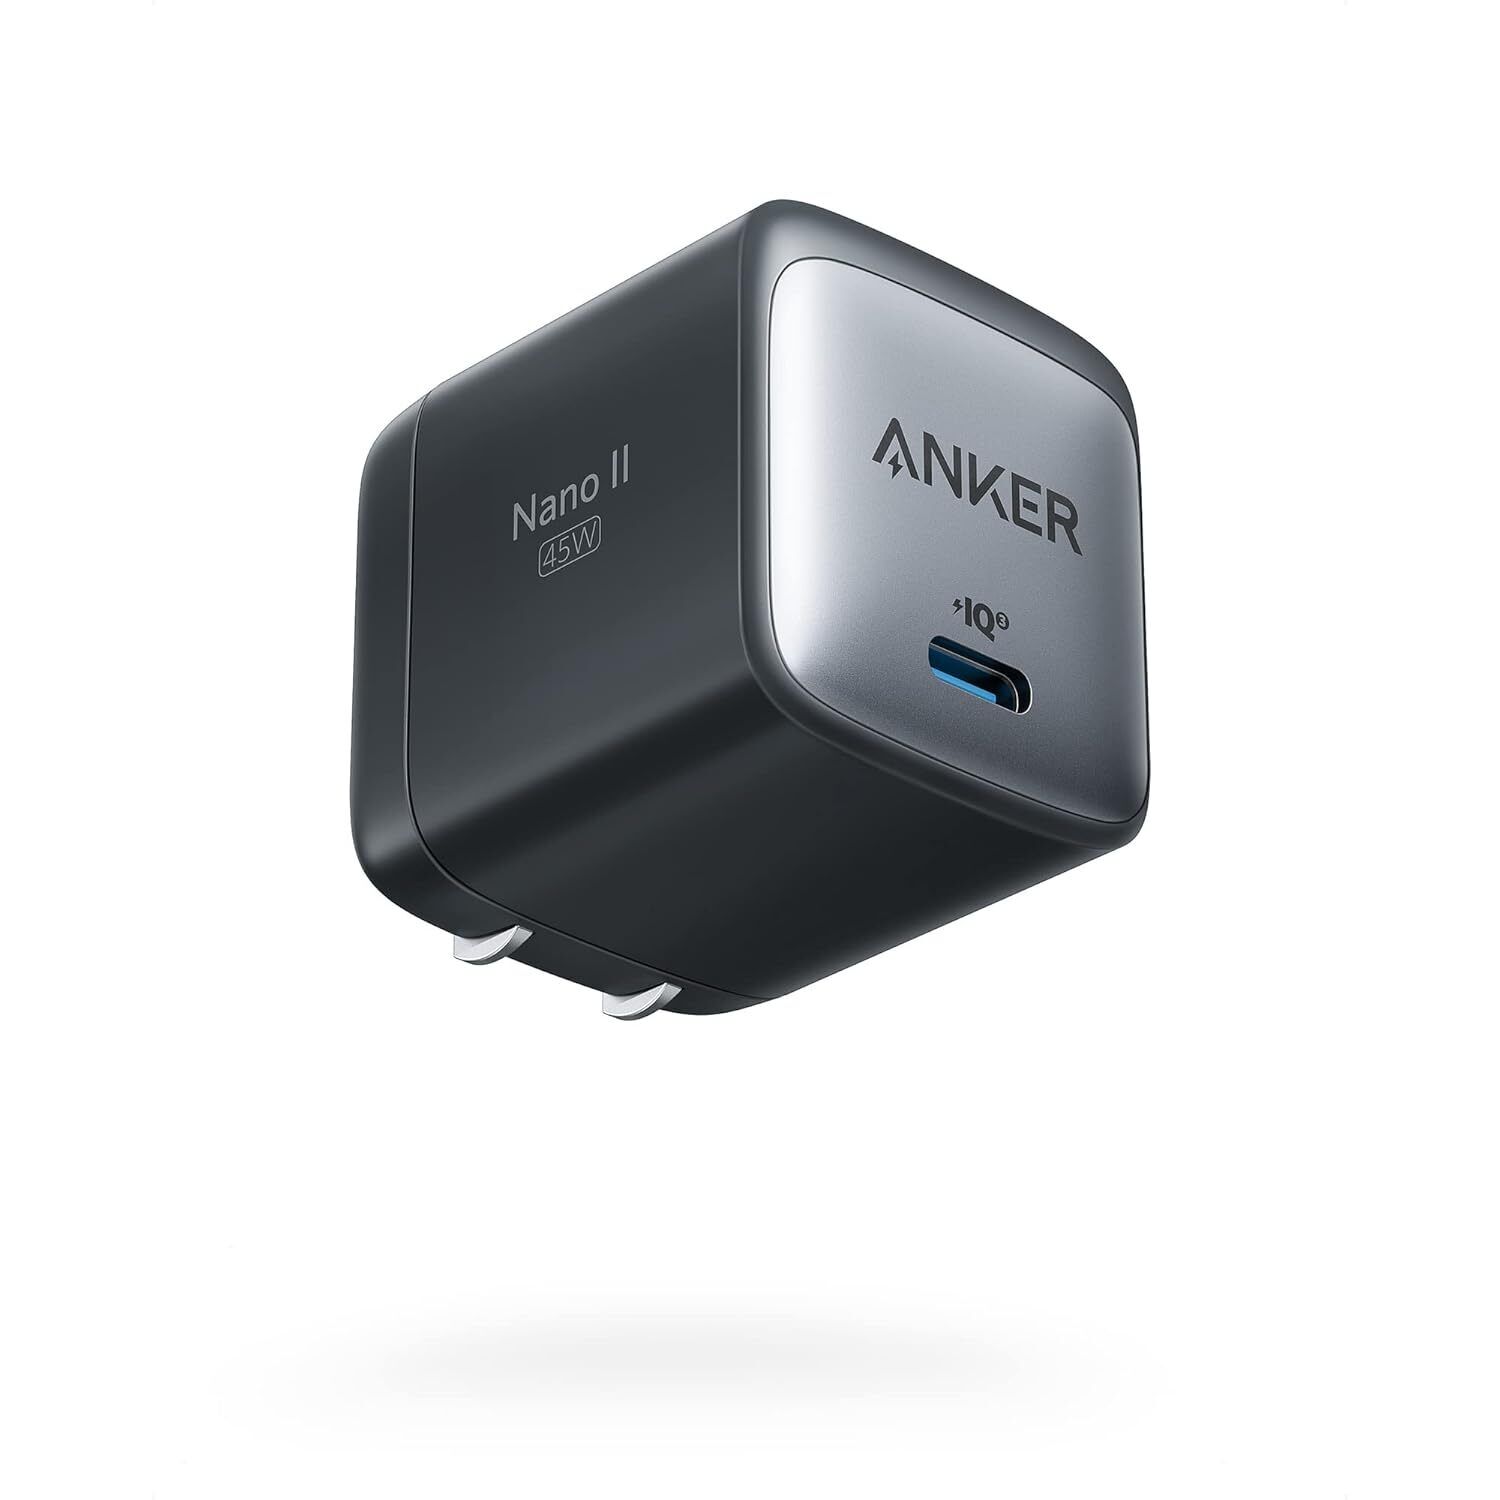 Anker USB C Charger, 713 Charger (Nano II 45W), GaN II PPS Fast Compact Foldab